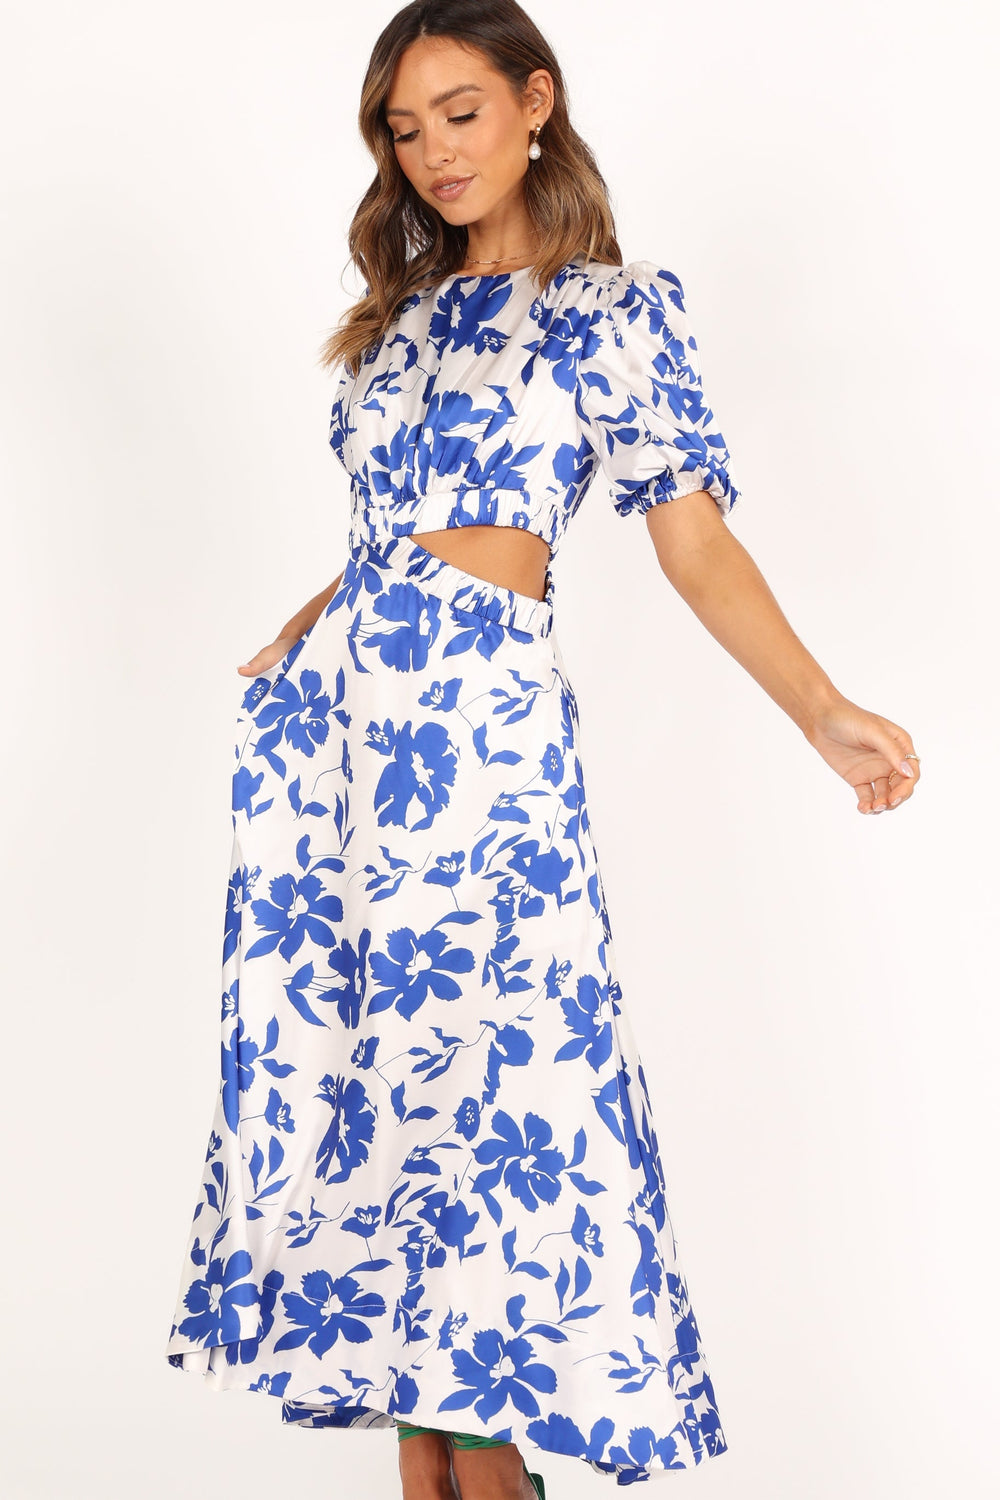 Aminah Puff Sleeve Dress - Blue Floral - Petal & Pup